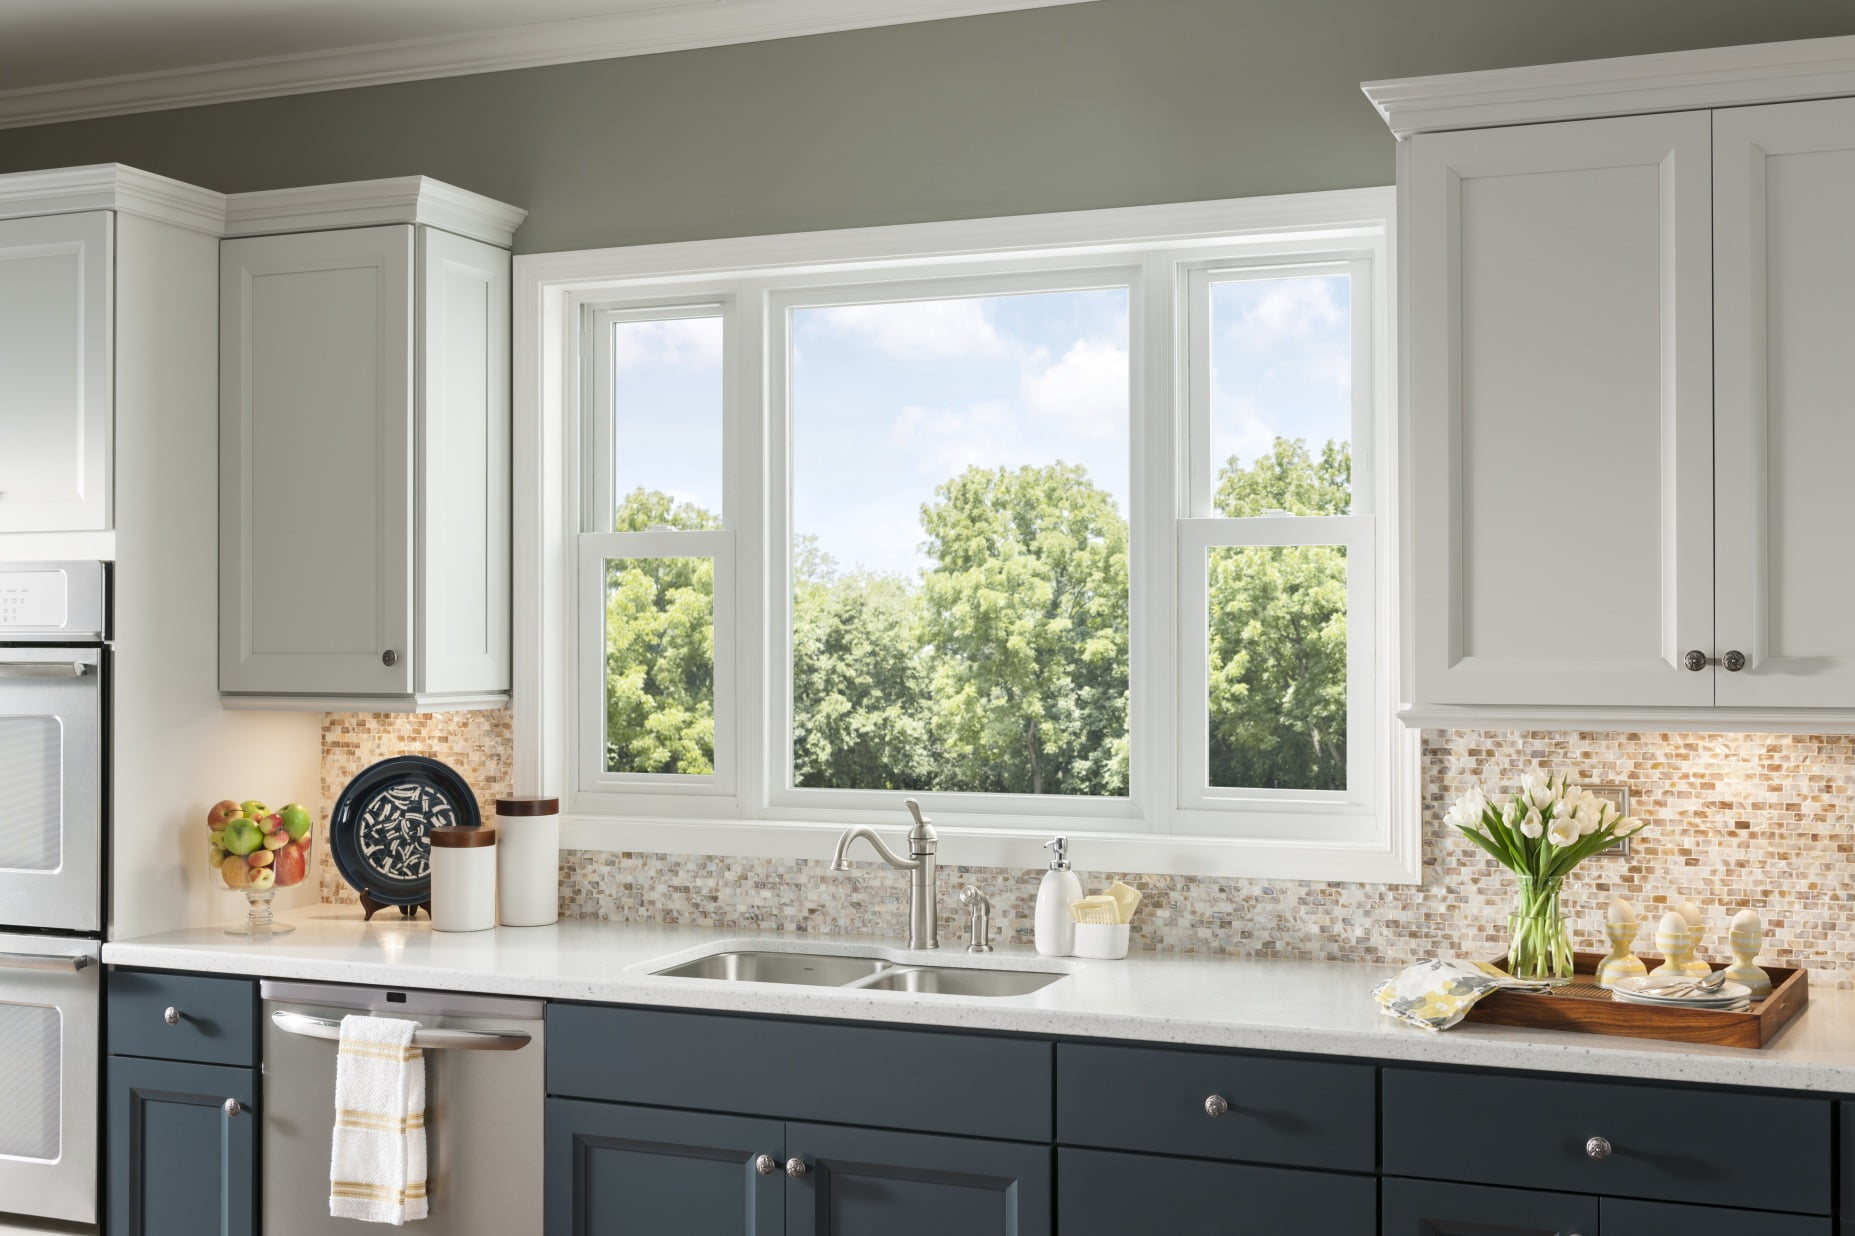 dimensions casement window over kitchen sink